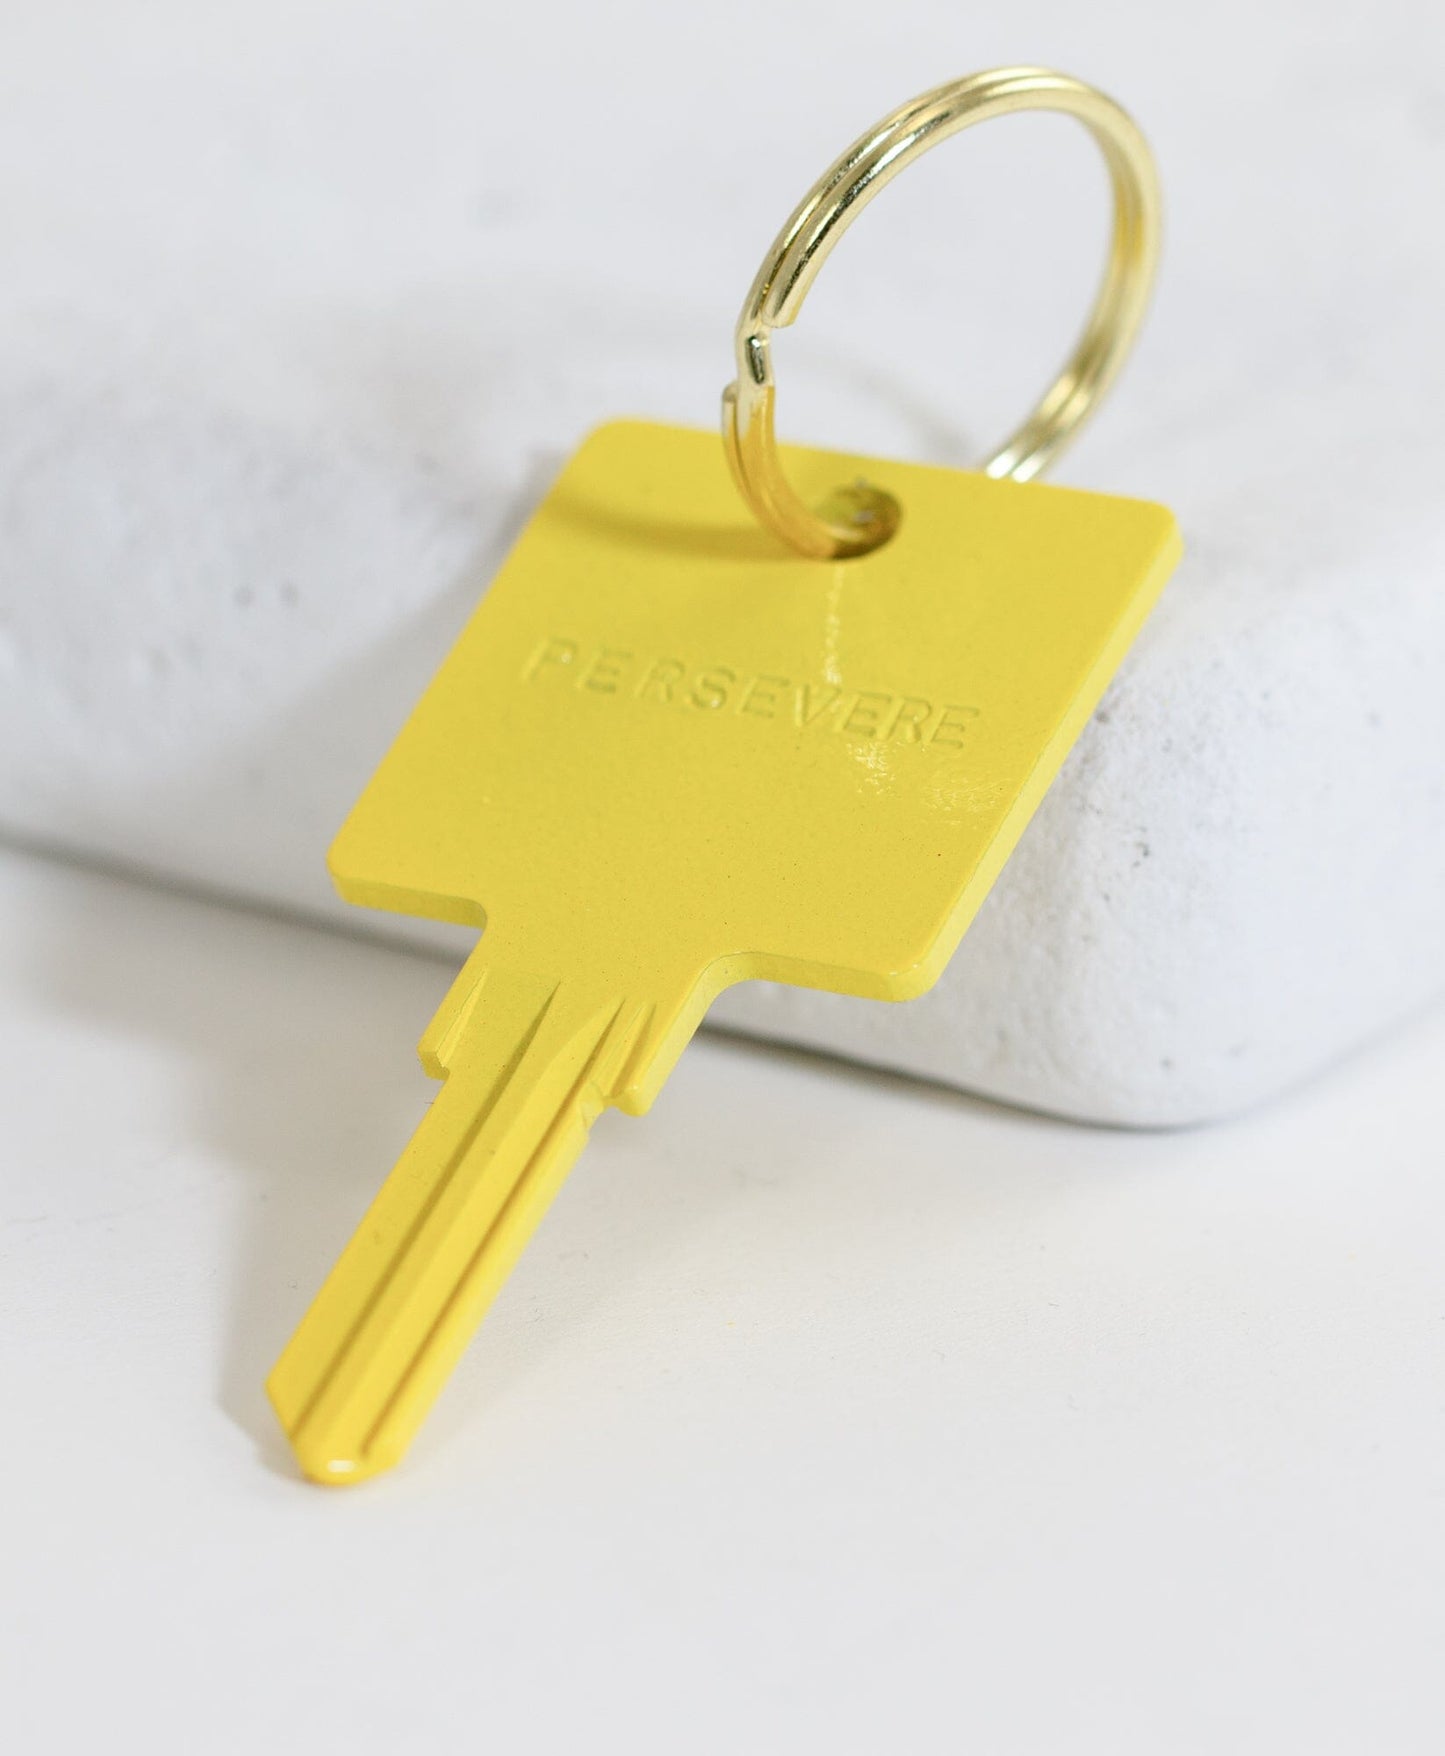 15 Year Anniversary PERSEVERE Yellow Original Keychain Key Chain The Giving Keys 